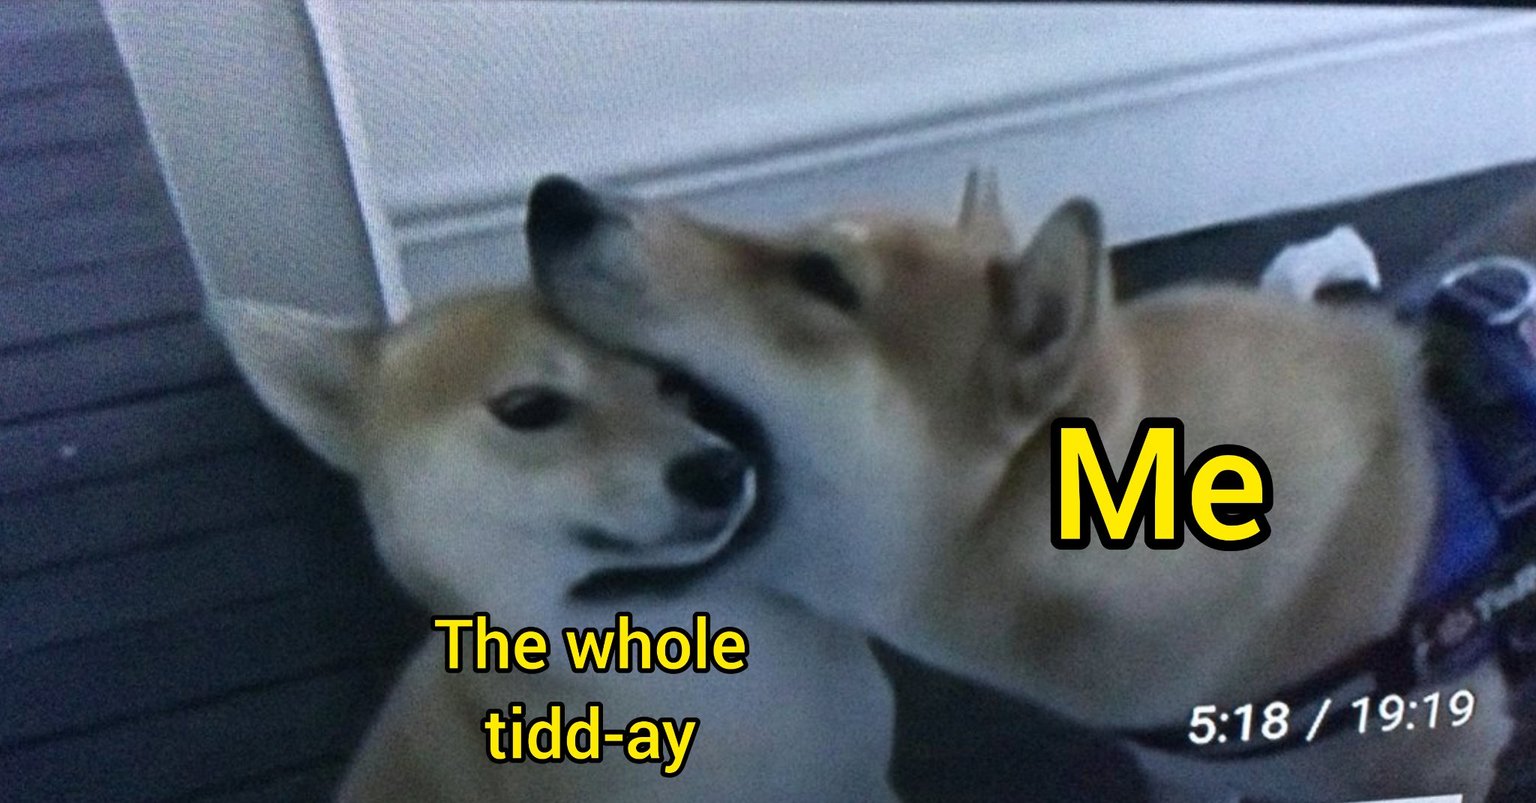 Tiddy - meme